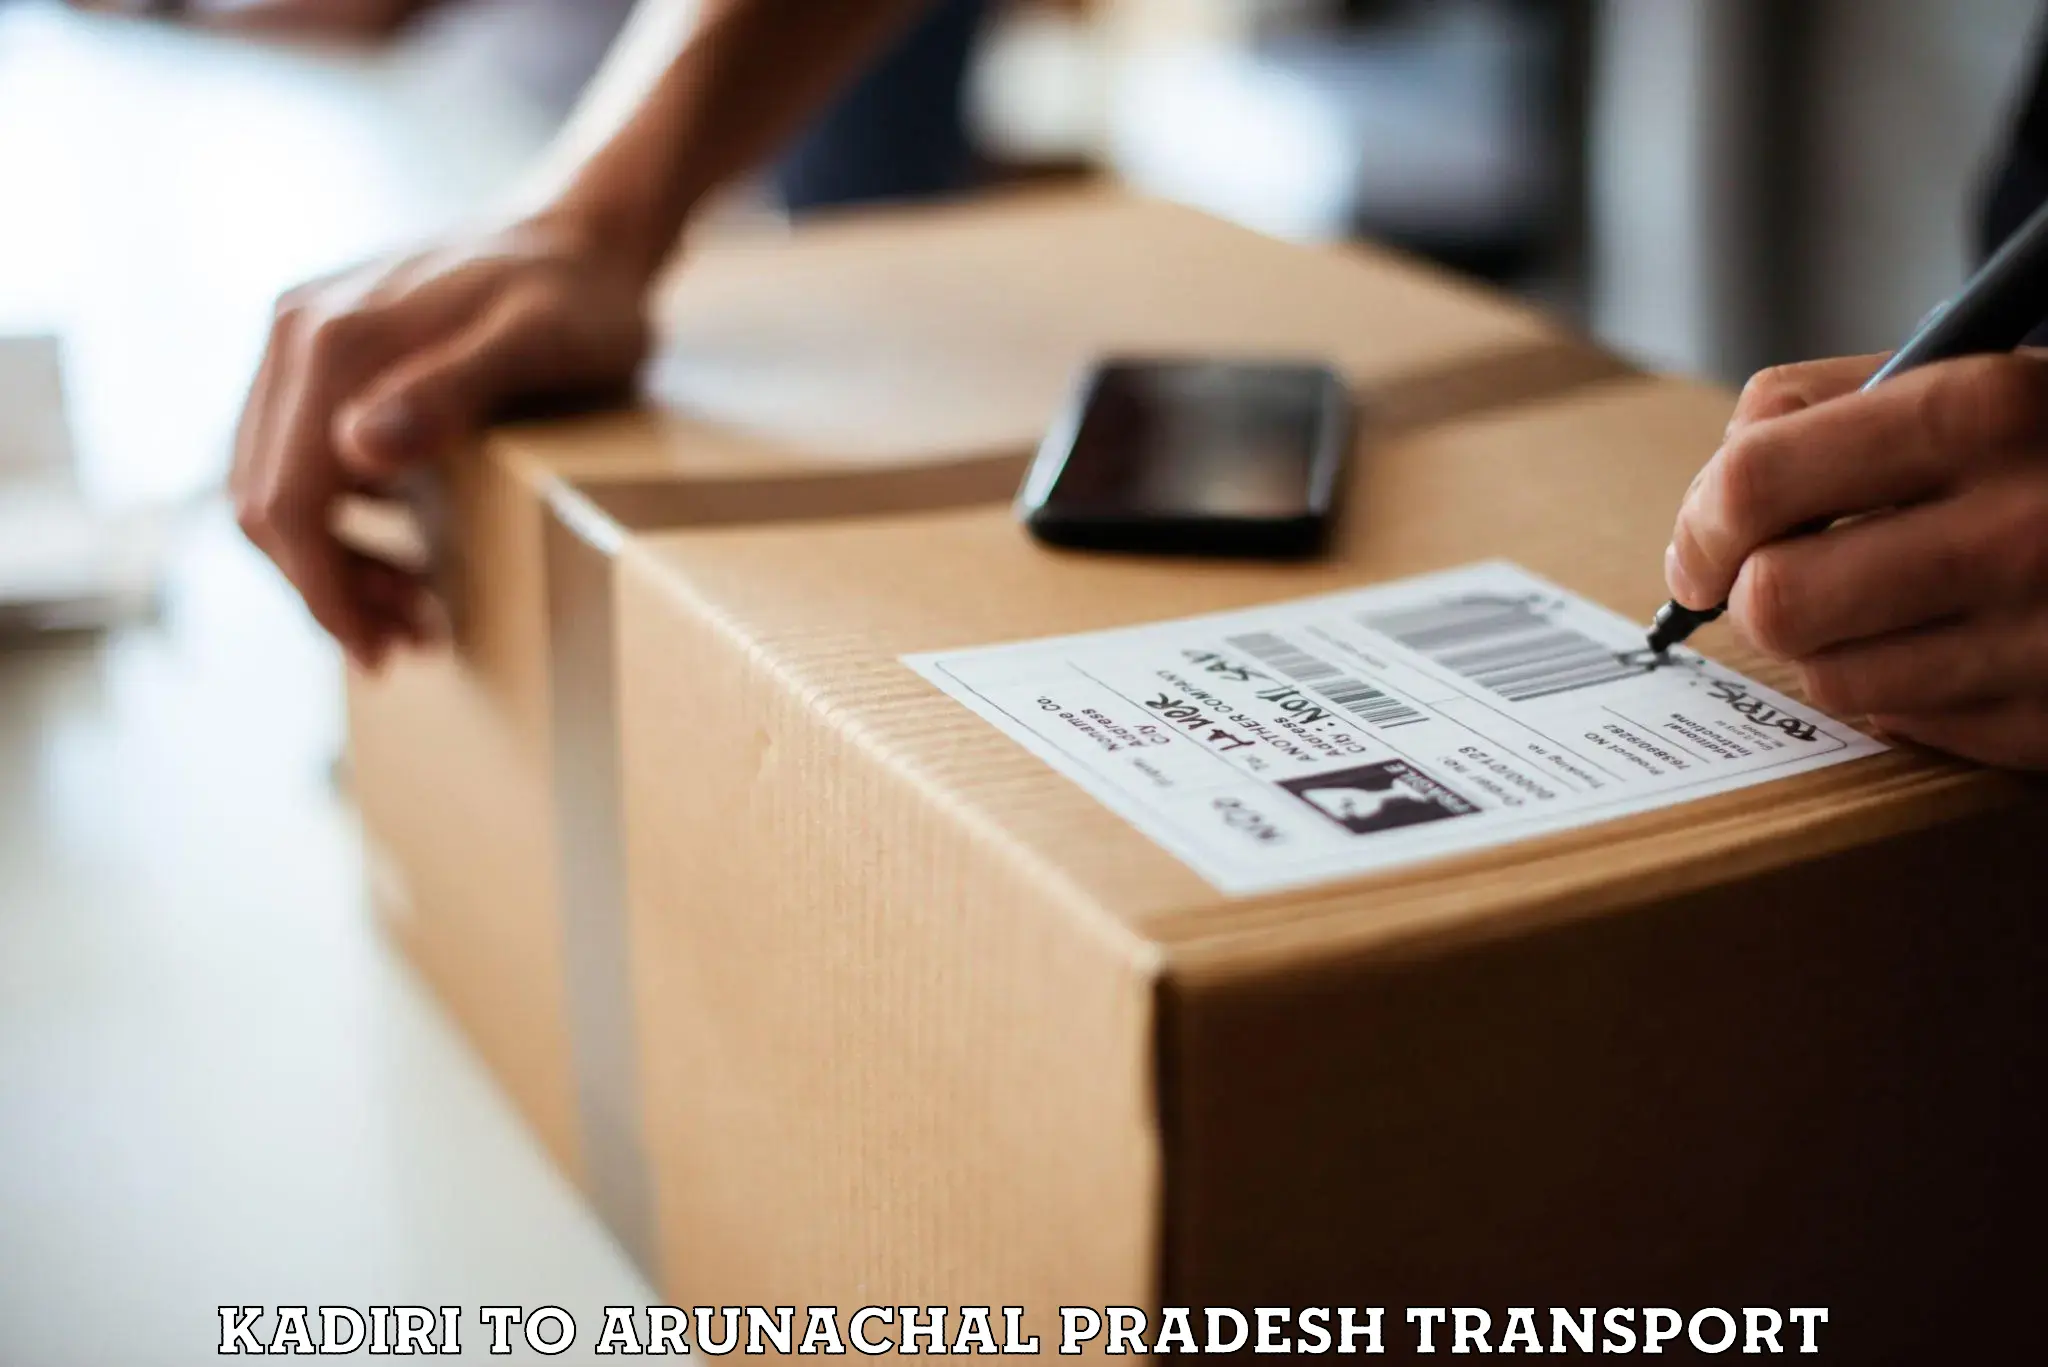 Truck transport companies in India Kadiri to Arunachal Pradesh